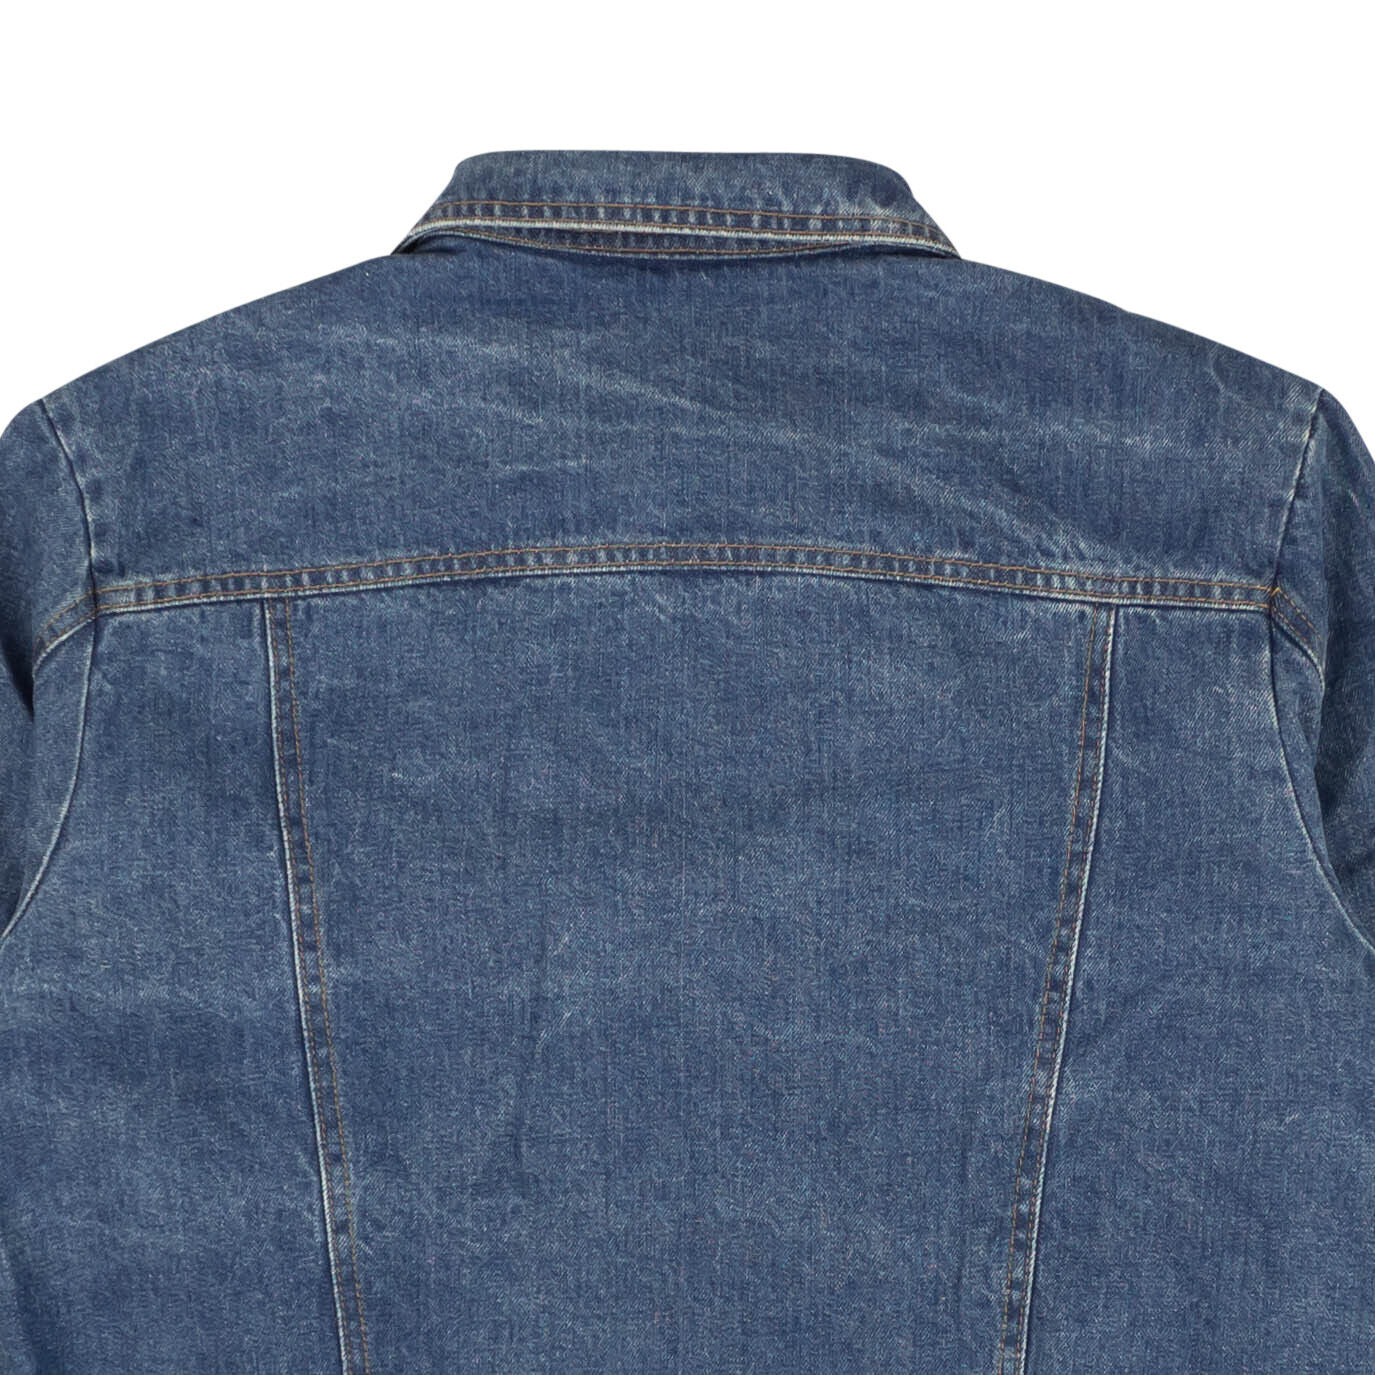 Pyer Moss Blue & White Leather Pocket Denim Jacket